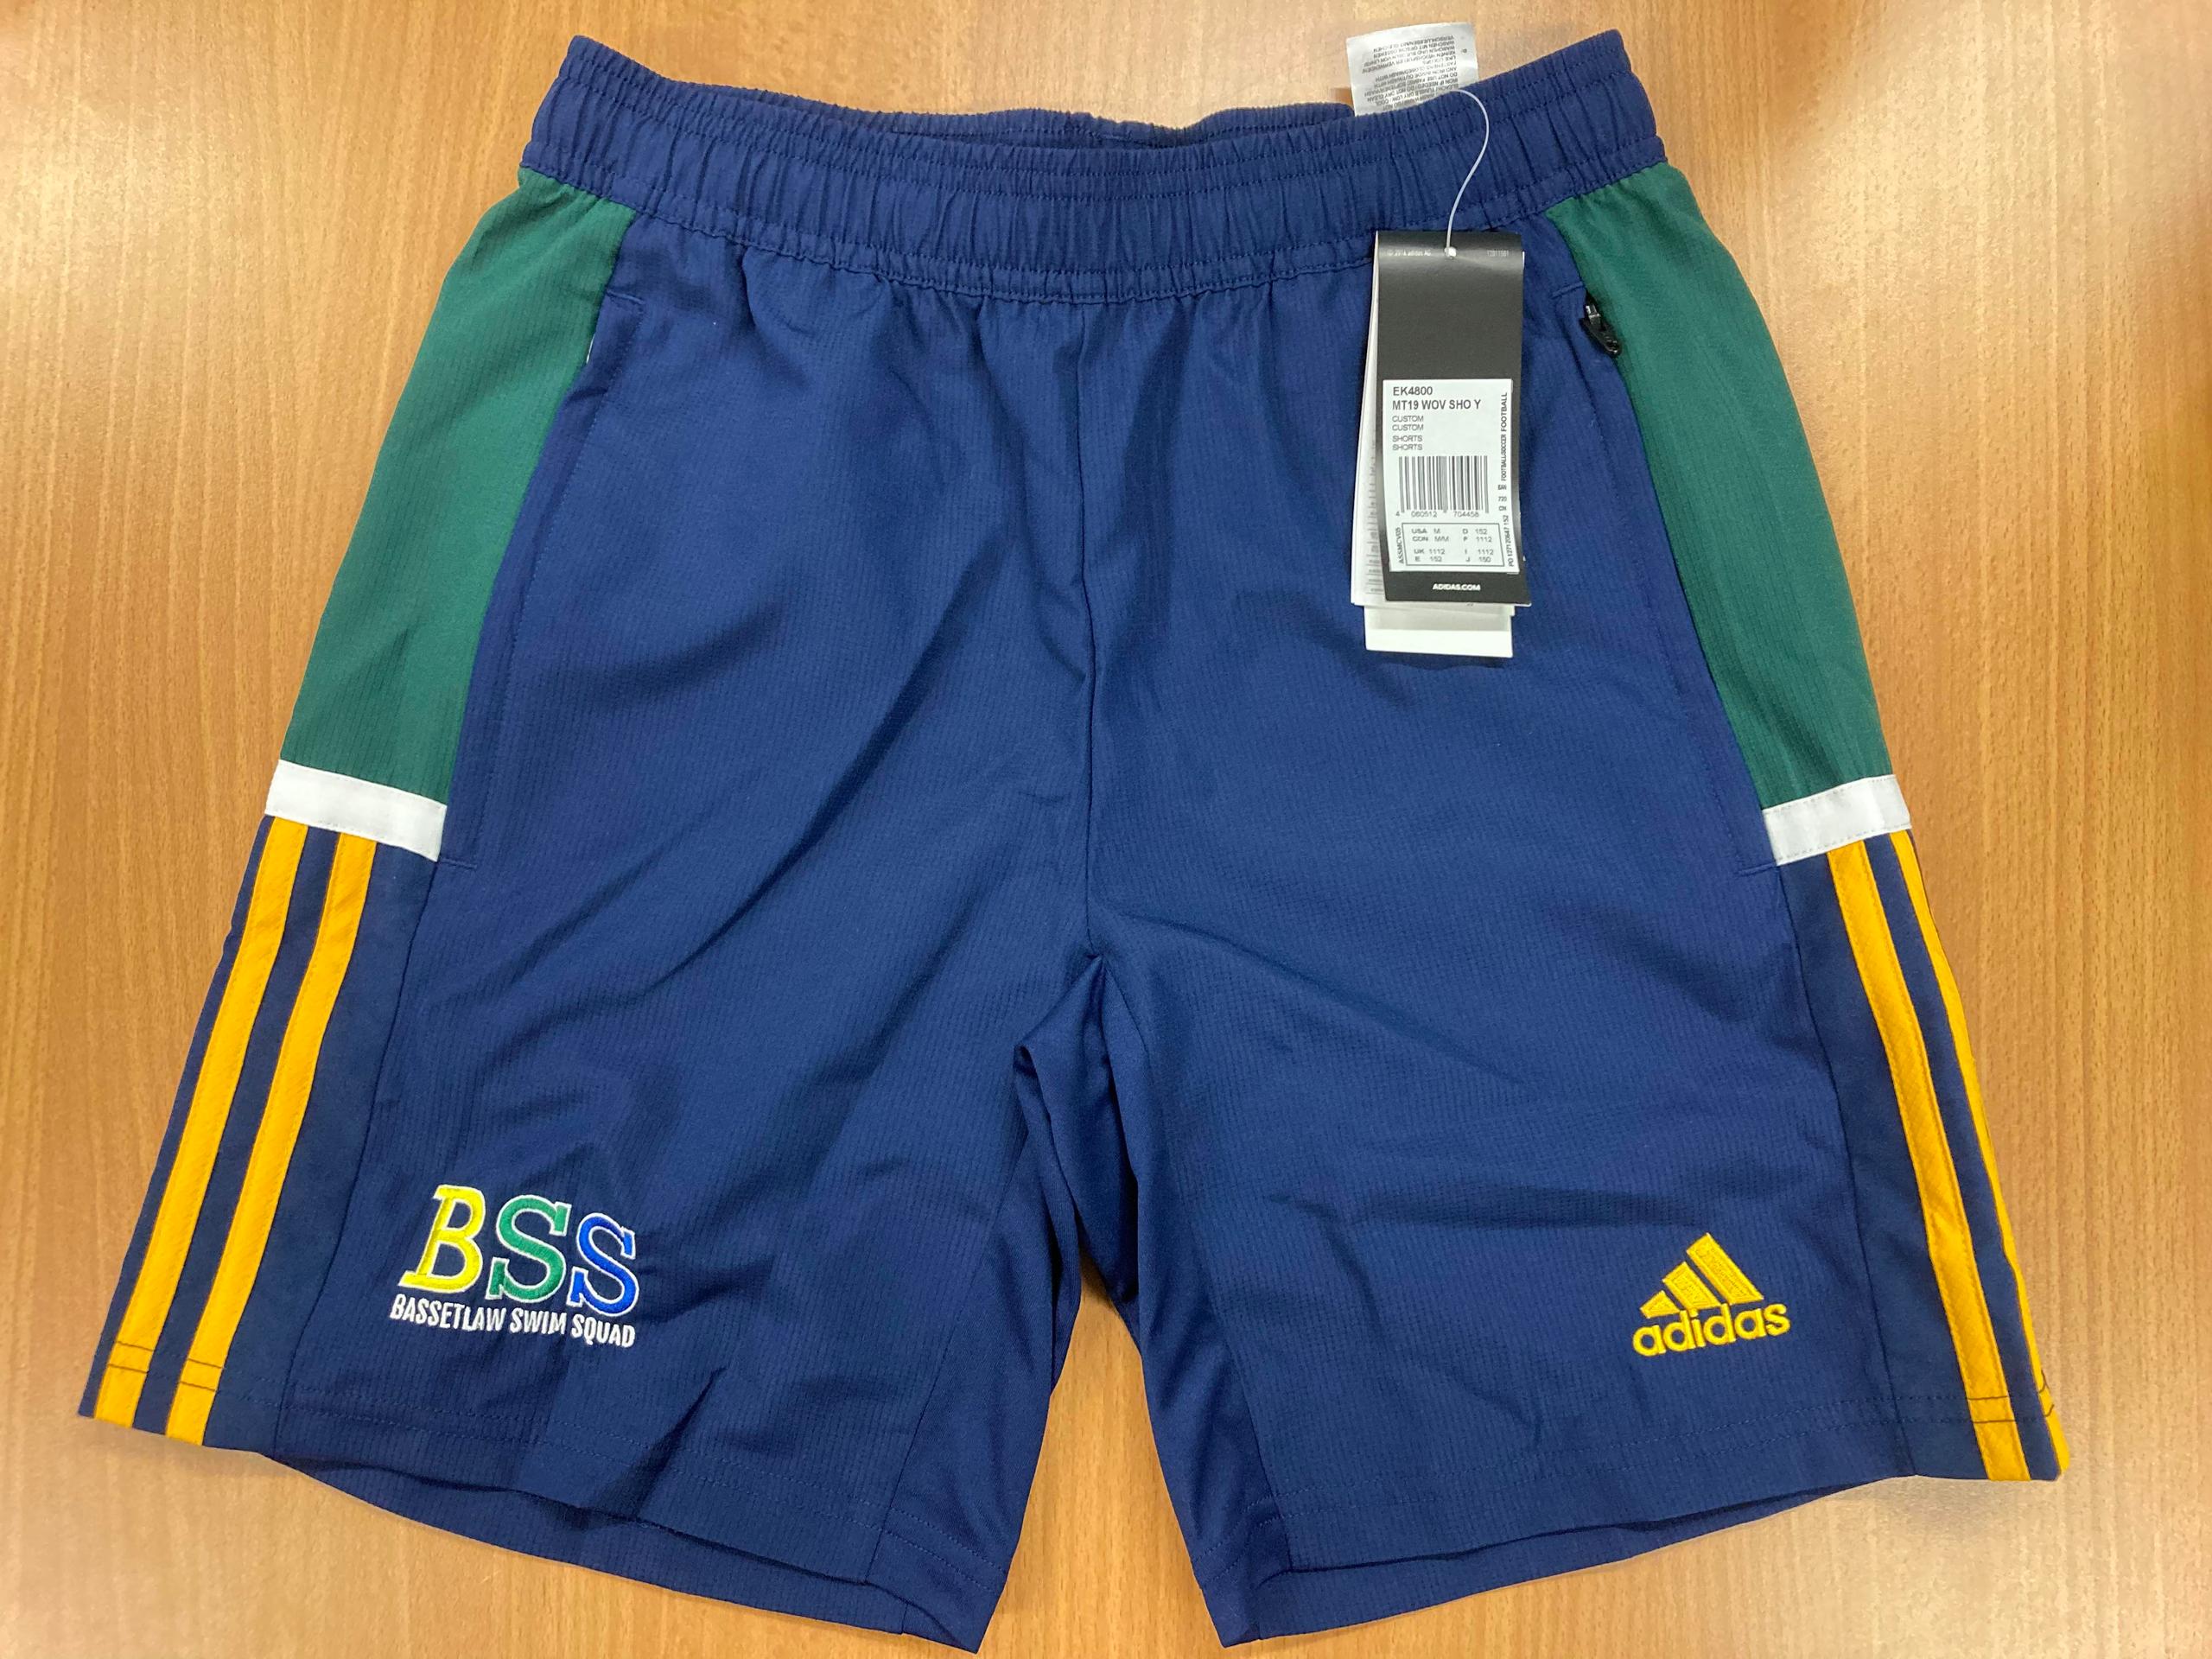 BSS Adidas Shorts